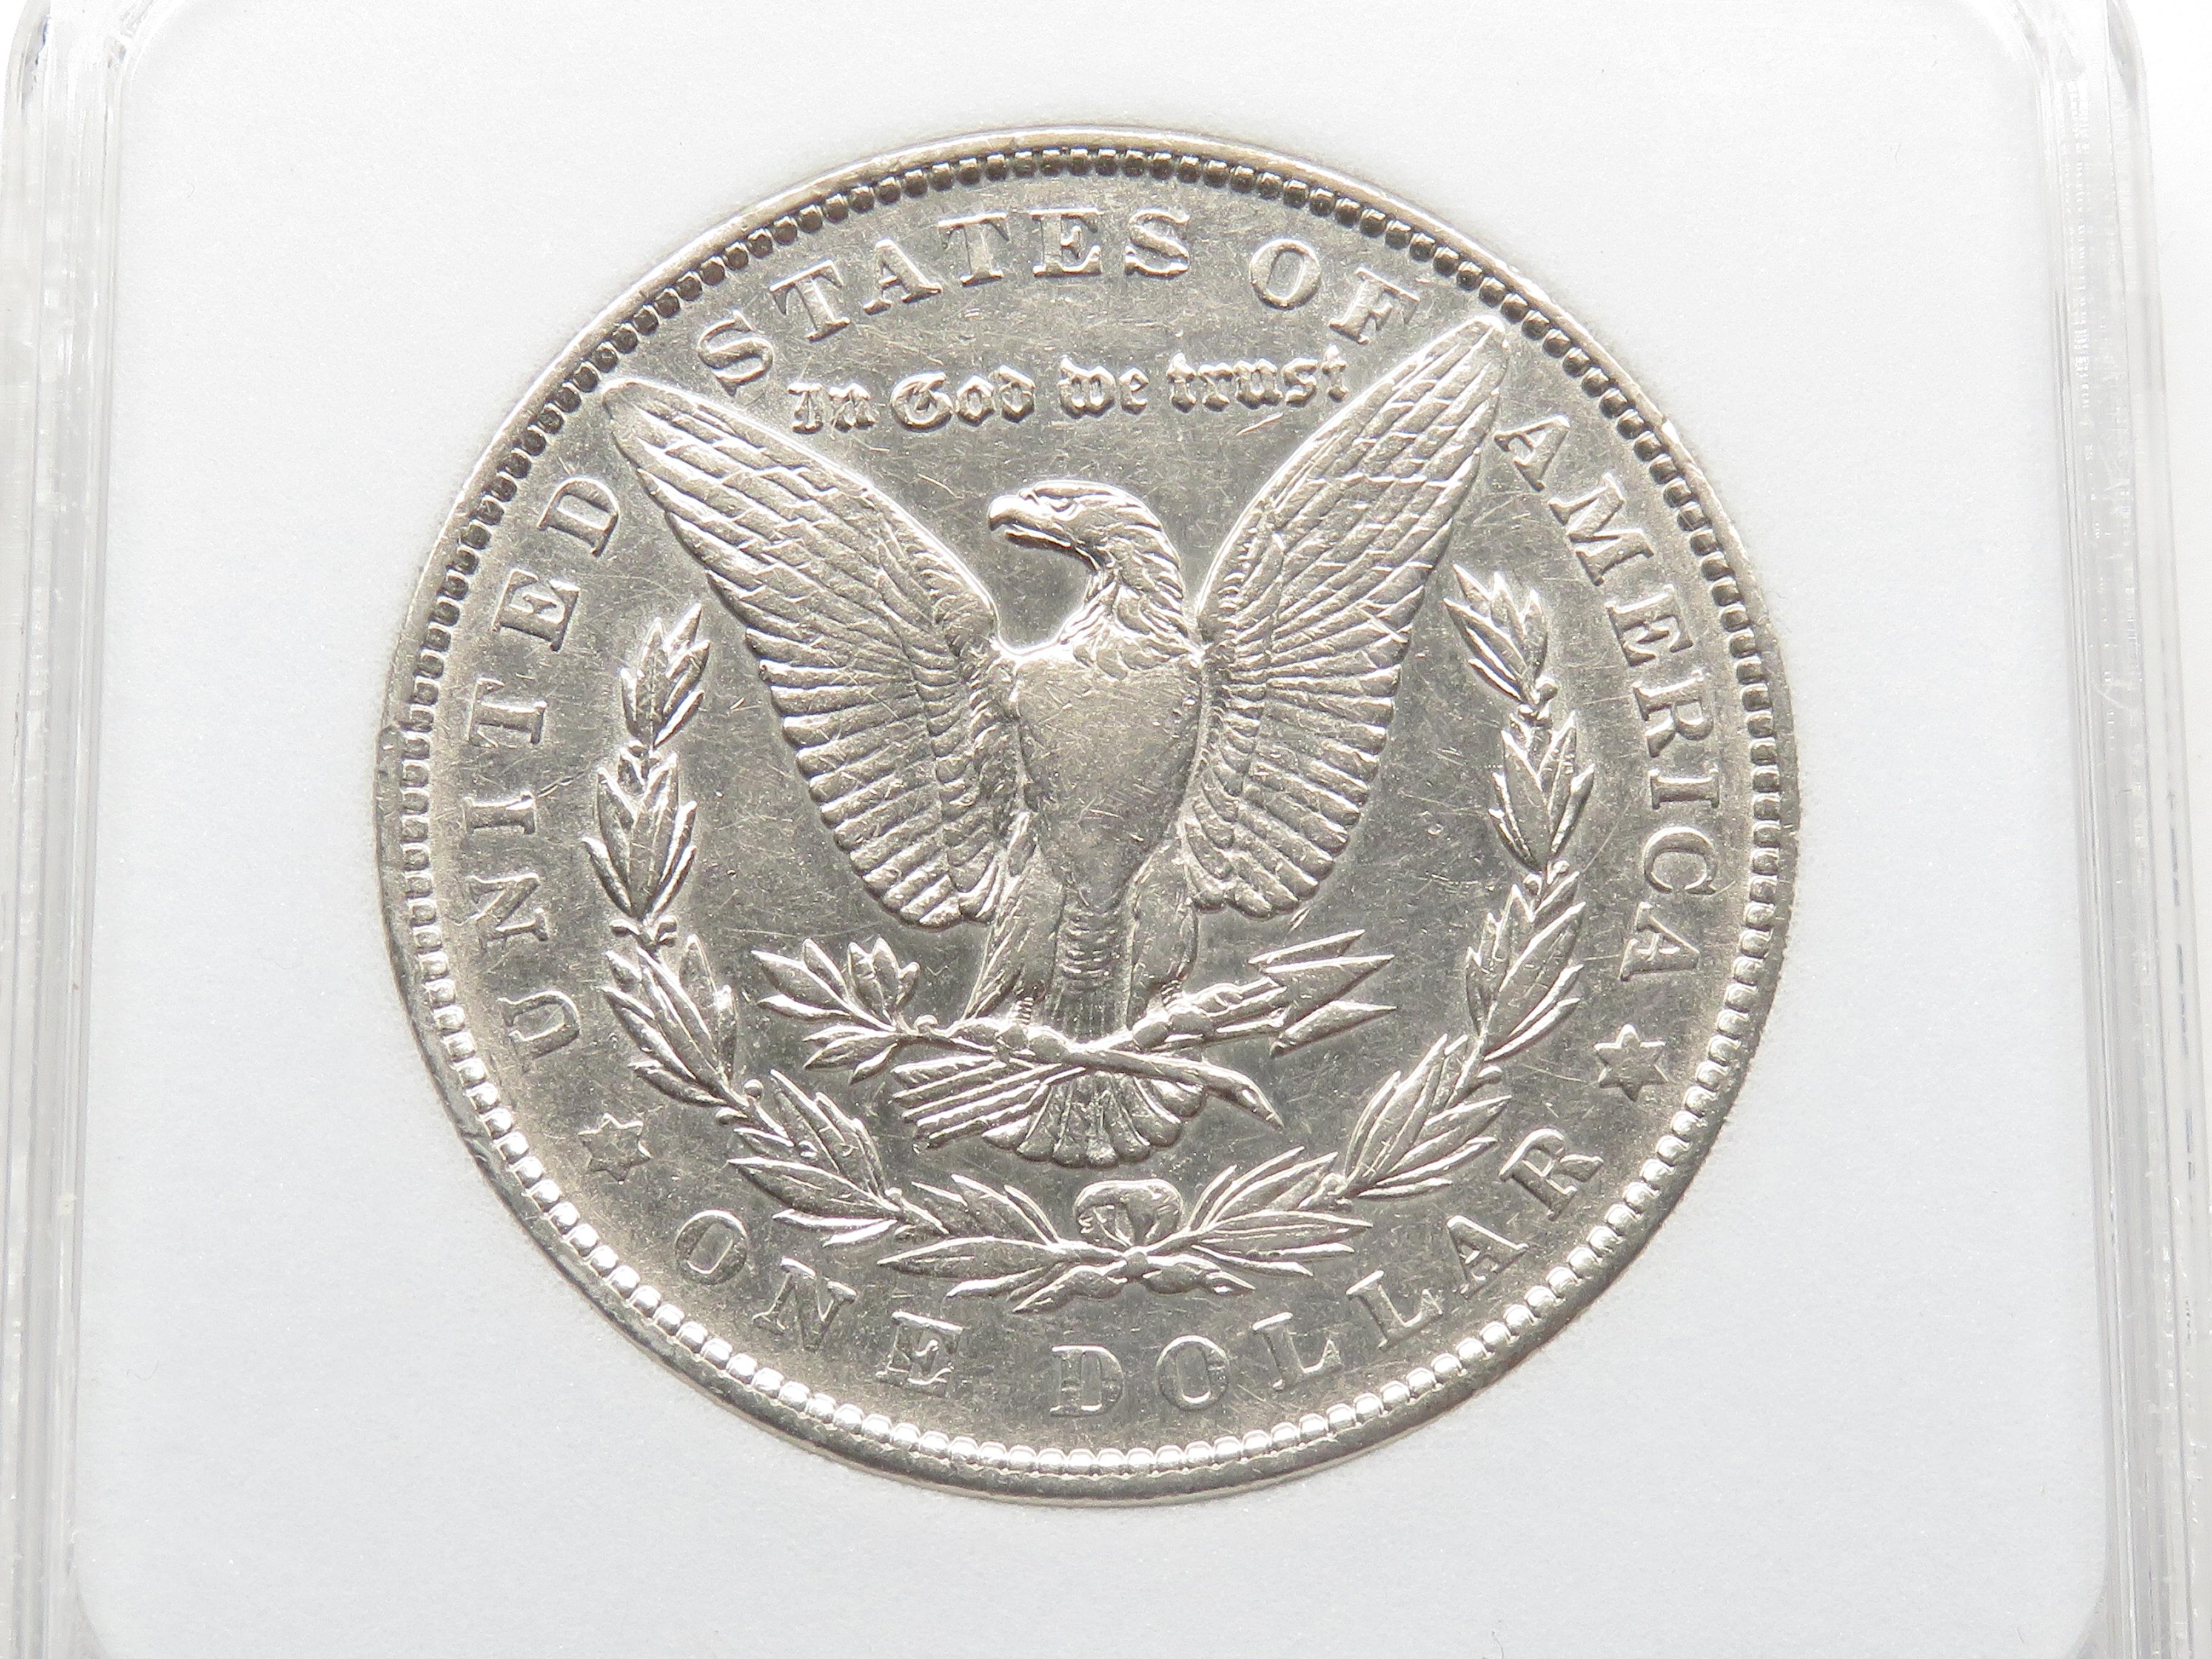 Morgan $ 1892 NNC AU58